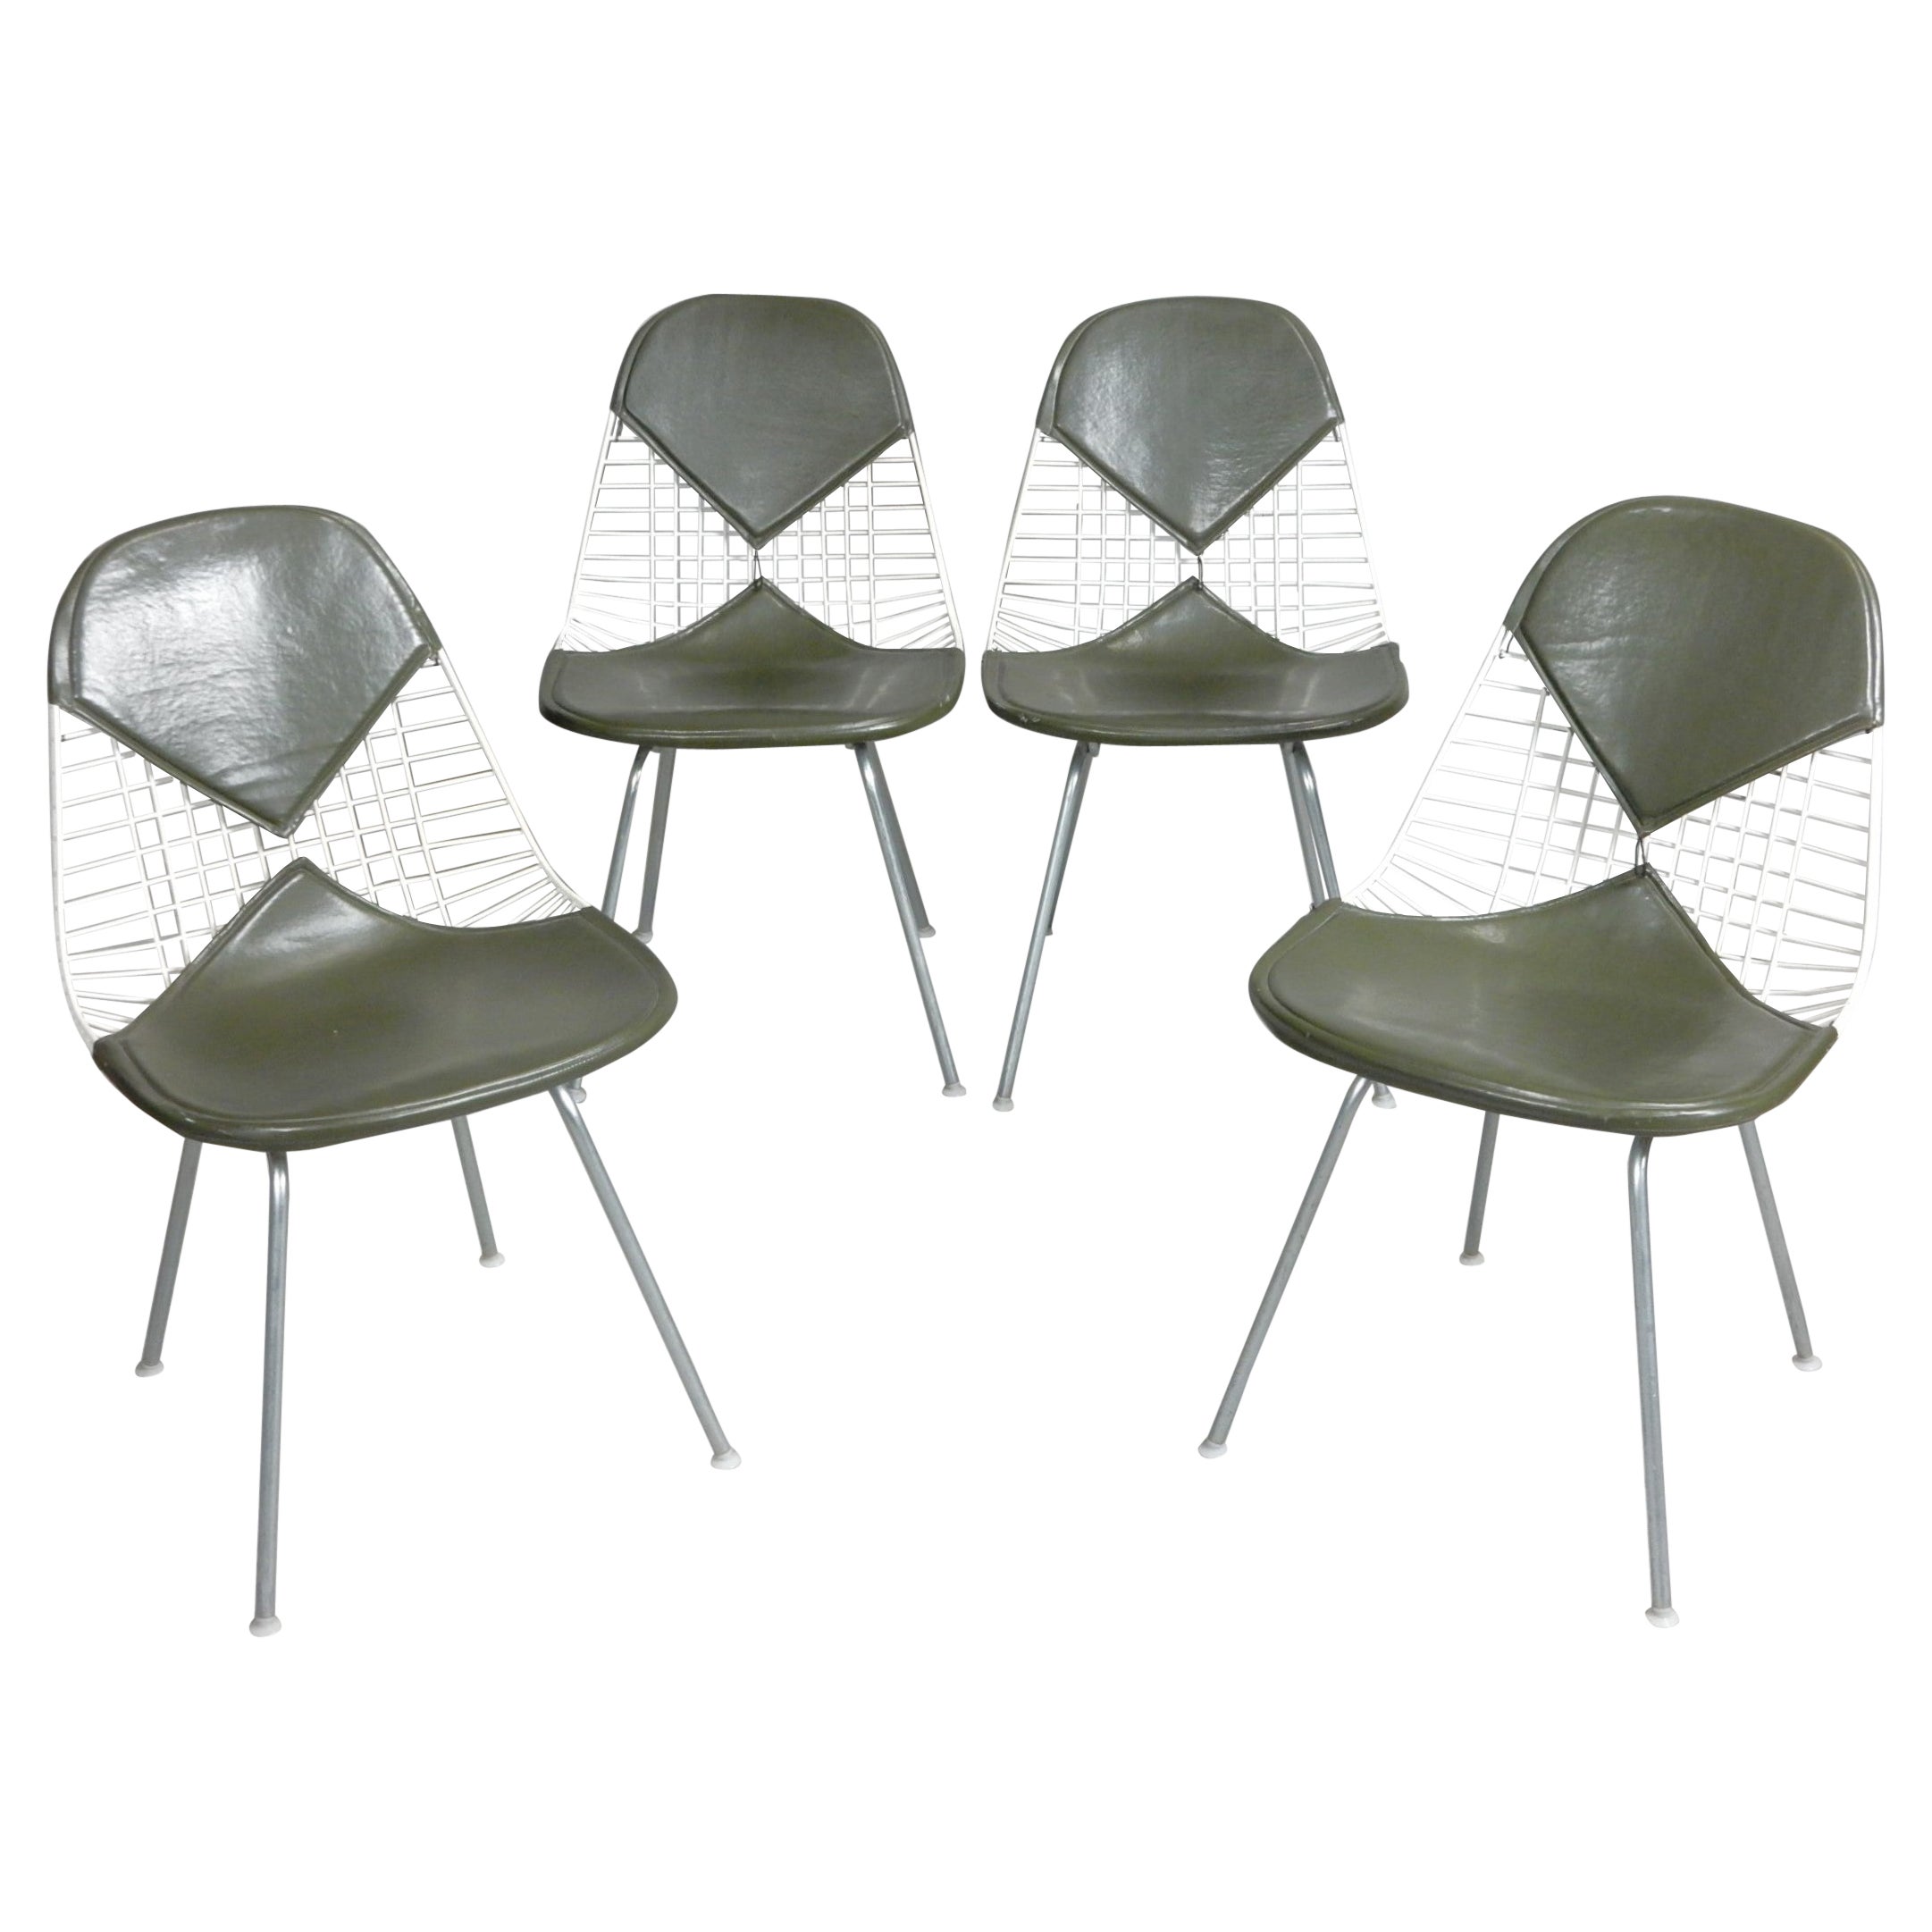 Original 1960's Herman Miller Charles & Ray Eames Bikini Wire Chairs set of 4